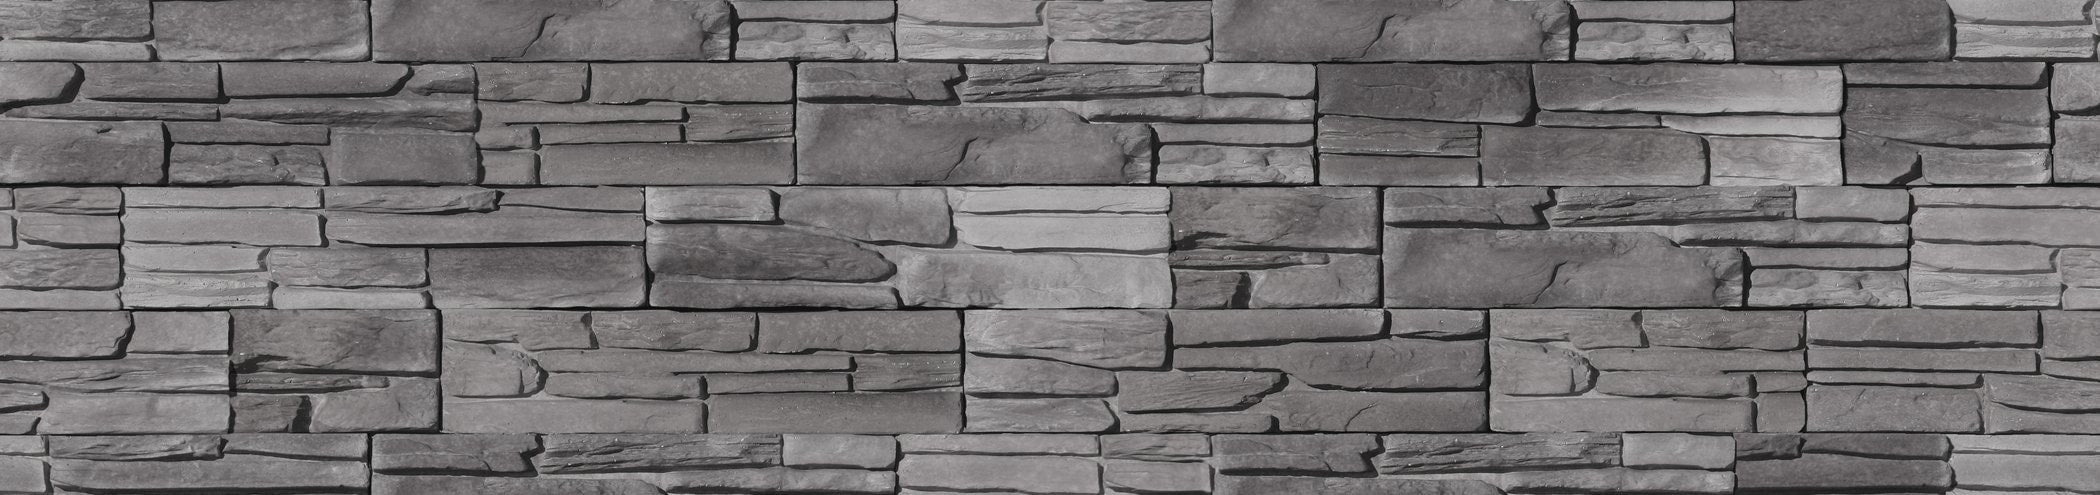 Viola Charcoal - Dry Stack Ledgestone cheap stone veneer clearance - Discount Stones wholesale stone veneer, cheap brick veneer, cultured stone for sale